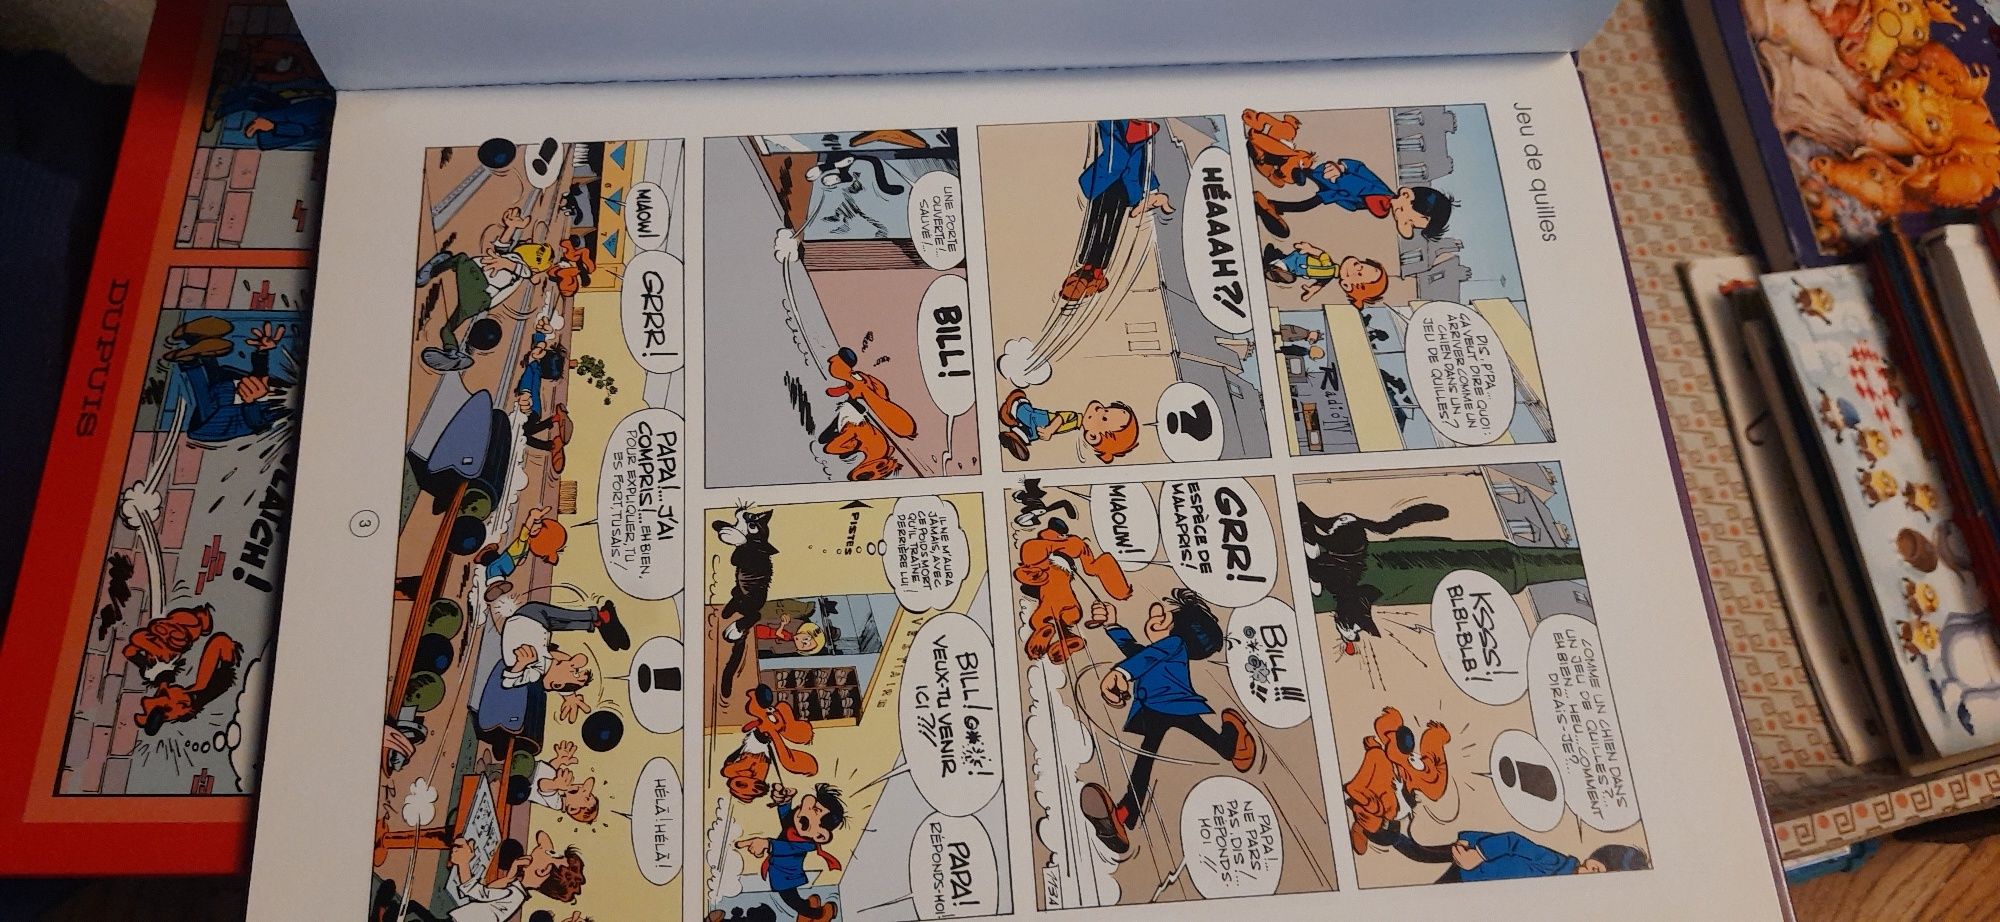 Komiks Boule & Bill numer 4 i 2 wyd. po francusku